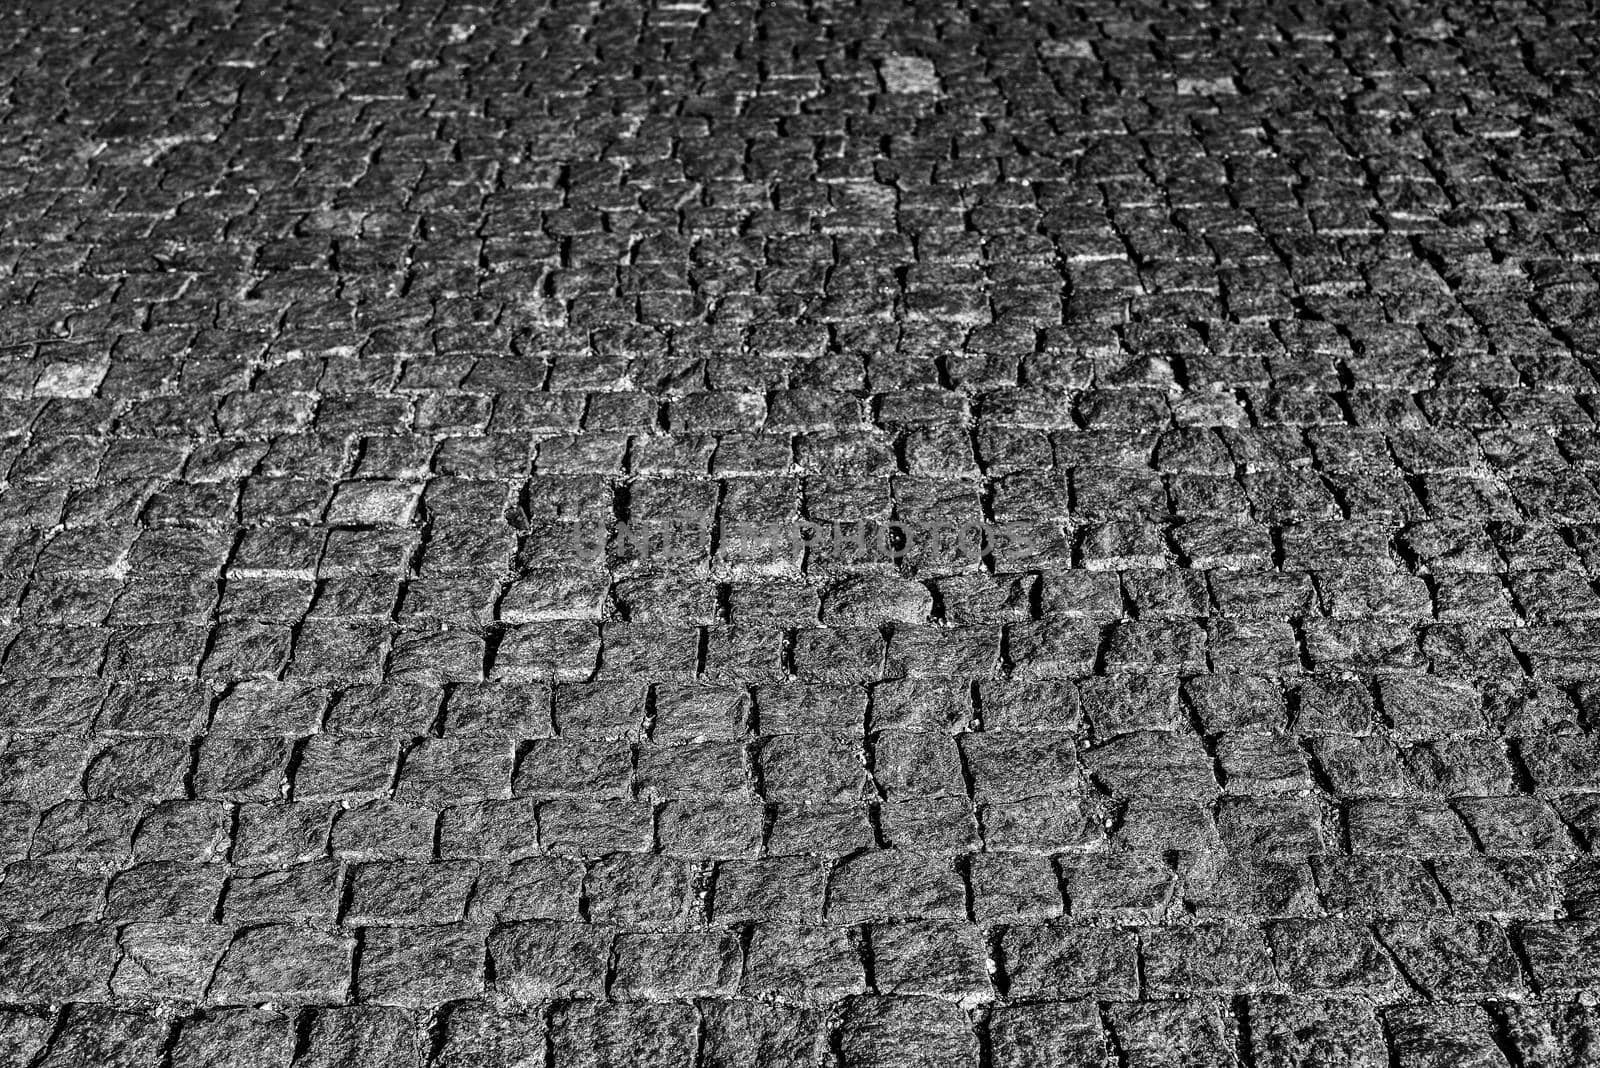 Stone road close up. Old pavement of granite. Grey square cobblestone sidewalk. Mock up or vintage grunge texture.